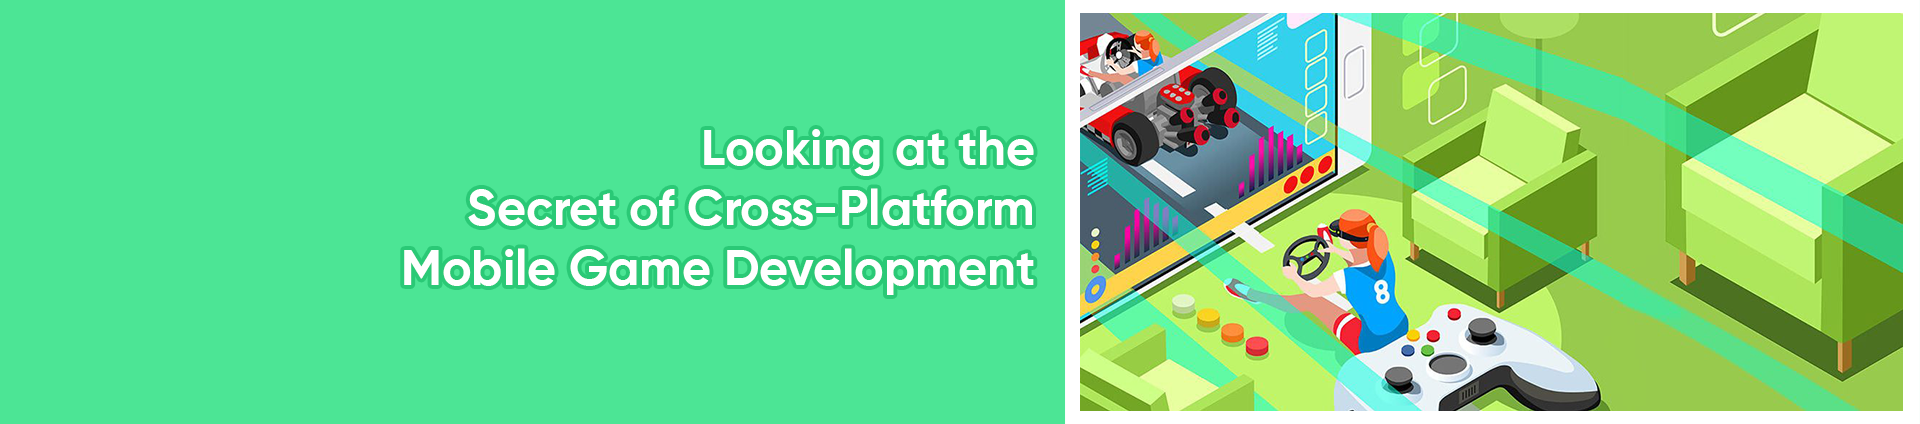 Secret of Cross-Platform Mobile Game Development